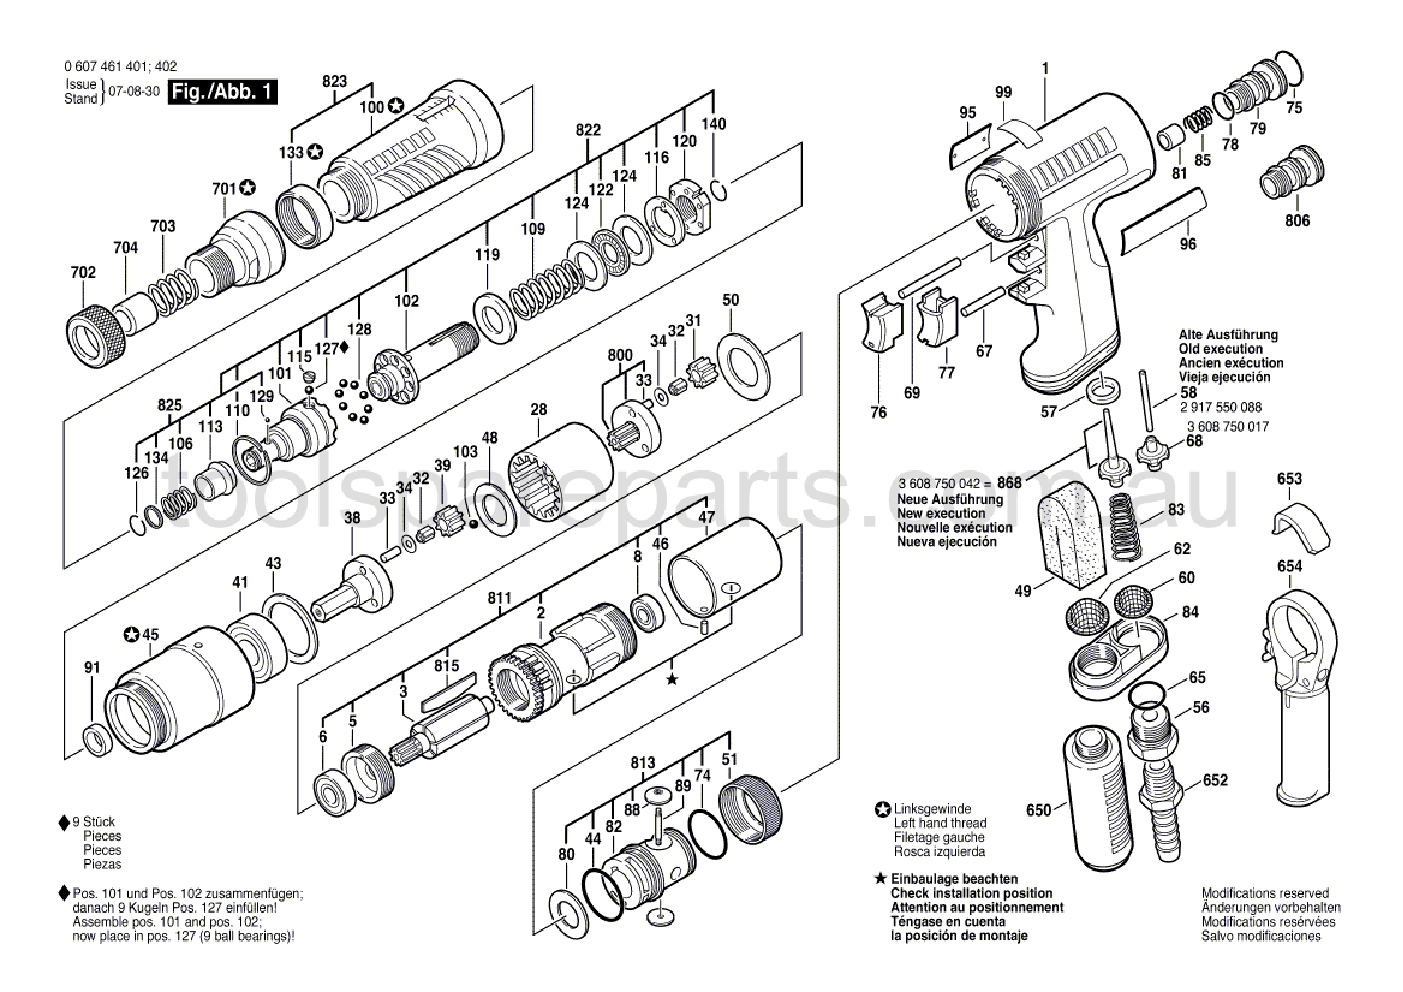 Bosch 400 WATT-SERIE 0607461401  Diagram 1